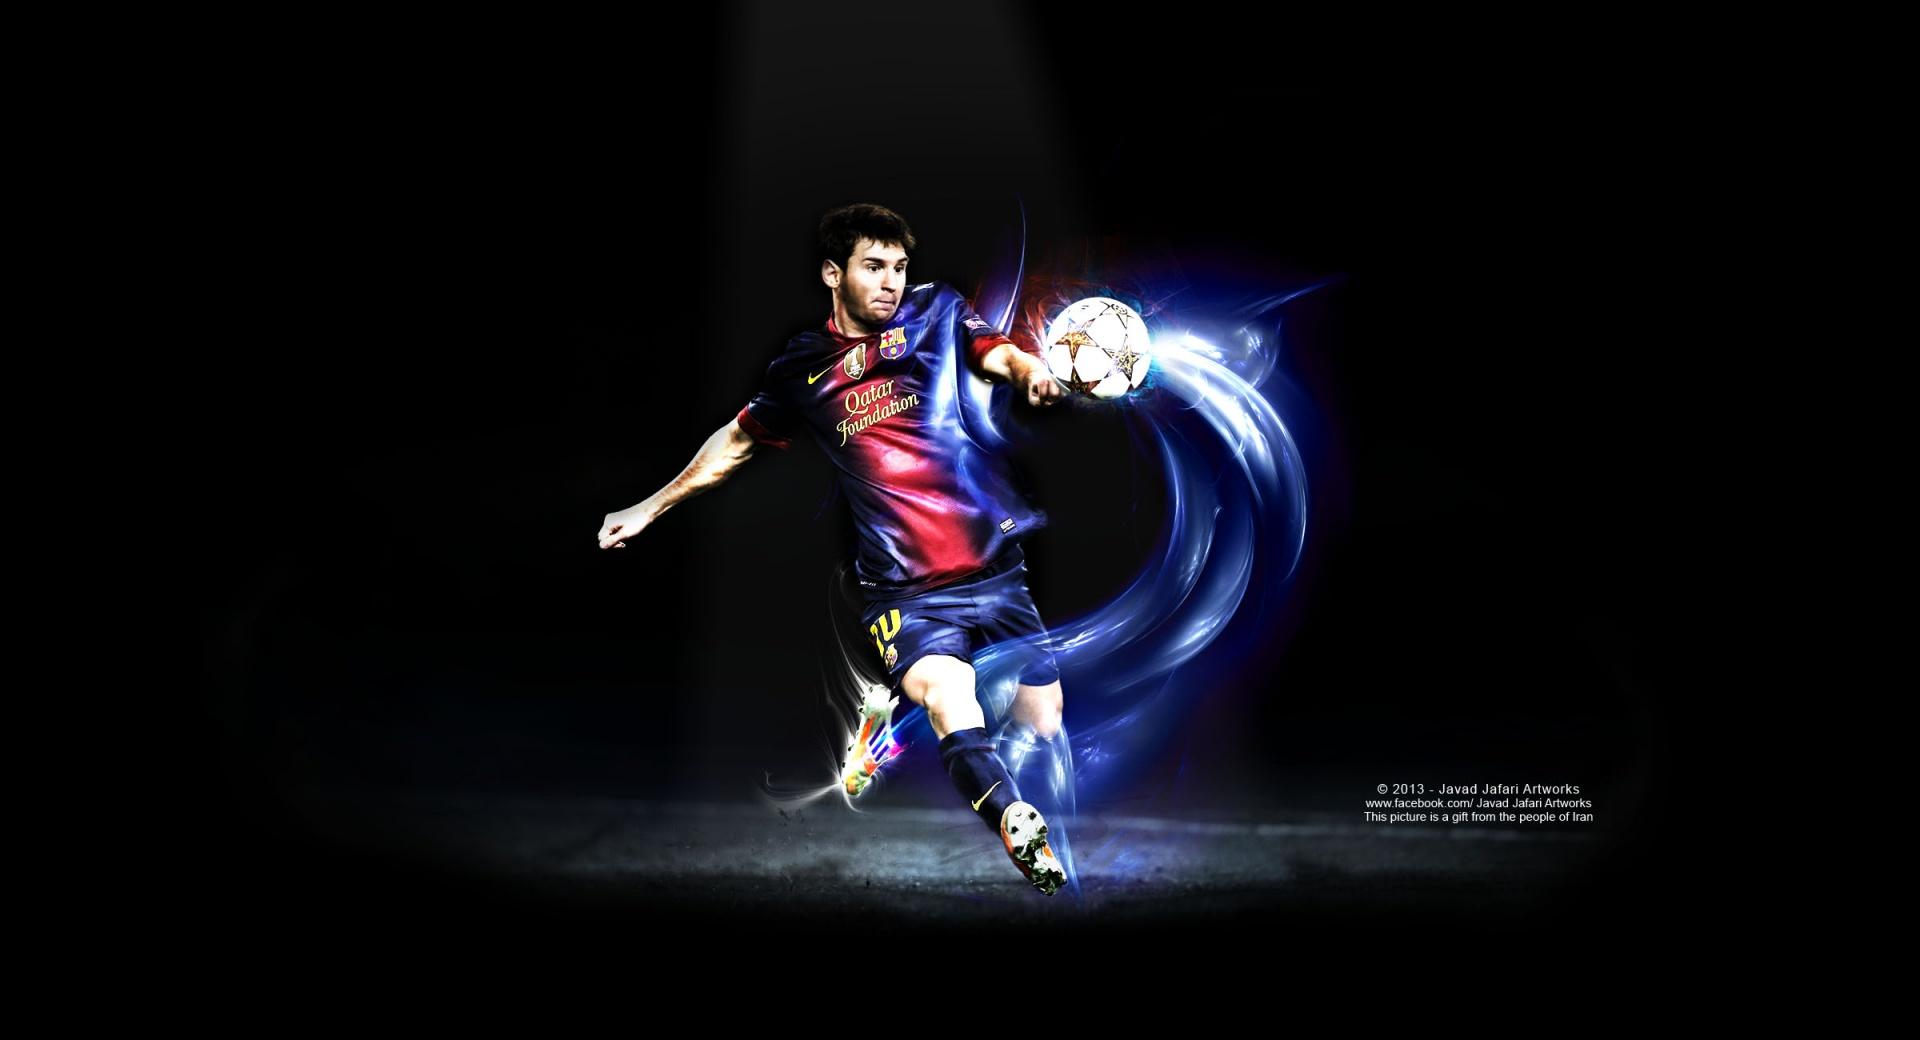 Messi Kick at 1024 x 1024 iPad size wallpapers HD quality